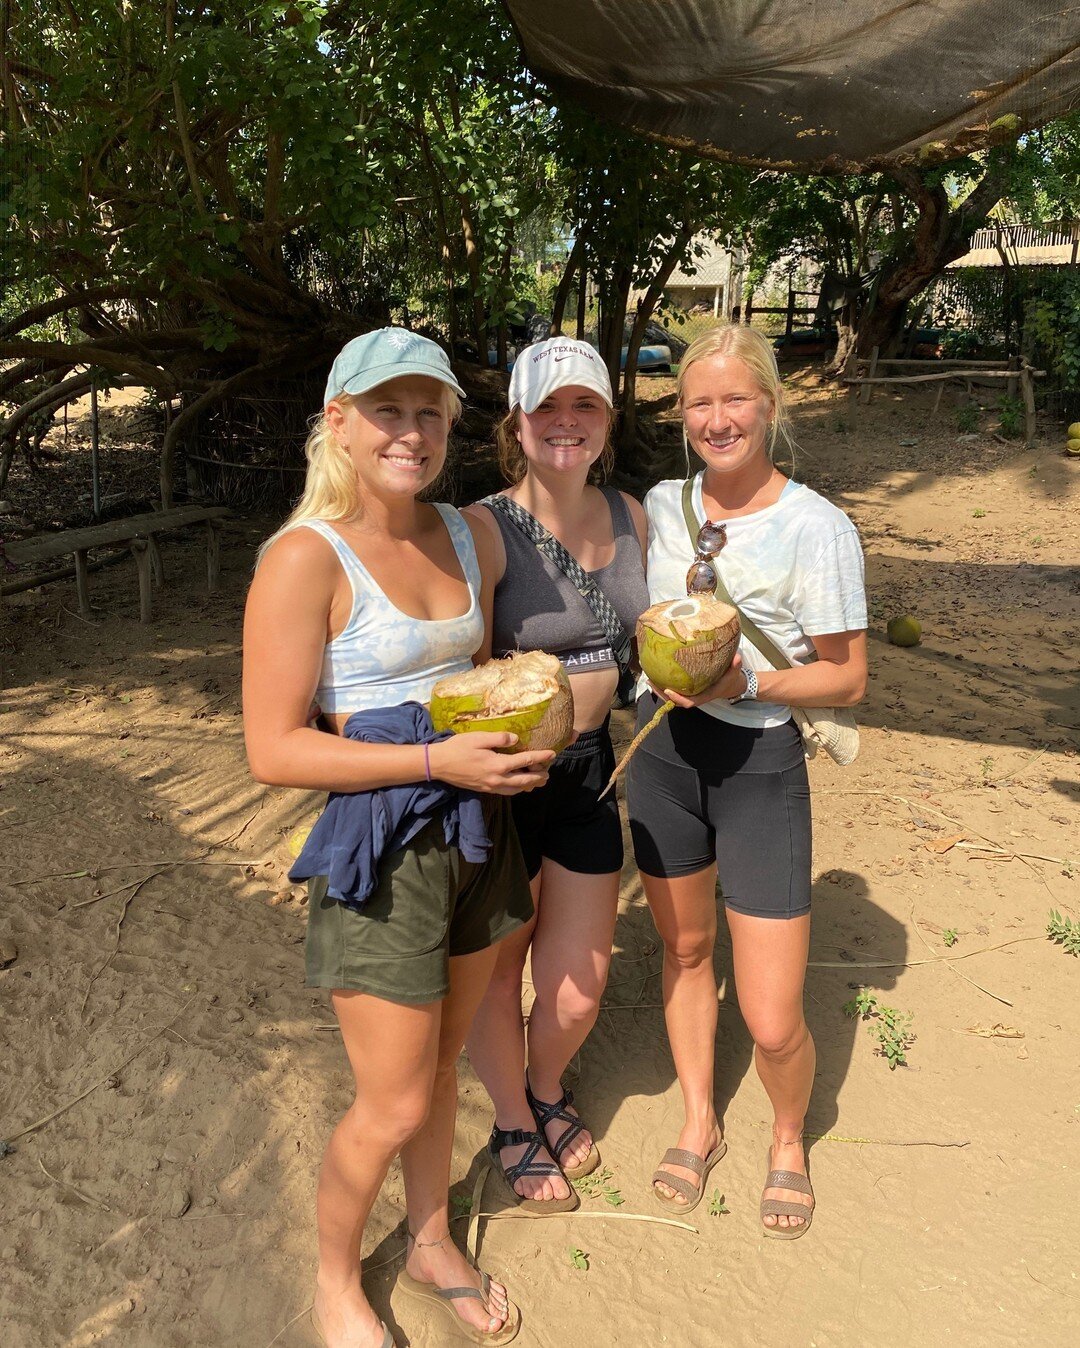 Just some happy ladies &amp; their coconuts enjoying the sunshine🥥🌞 Happy Wednesday! ​​​​​​​​
​​​​​​​​
#surfandyogaretreat #adventureretreats #exploretheworldtogether #seetheworldwithus #mexicoretreat #wellnessretreats  #plantbasedretreat